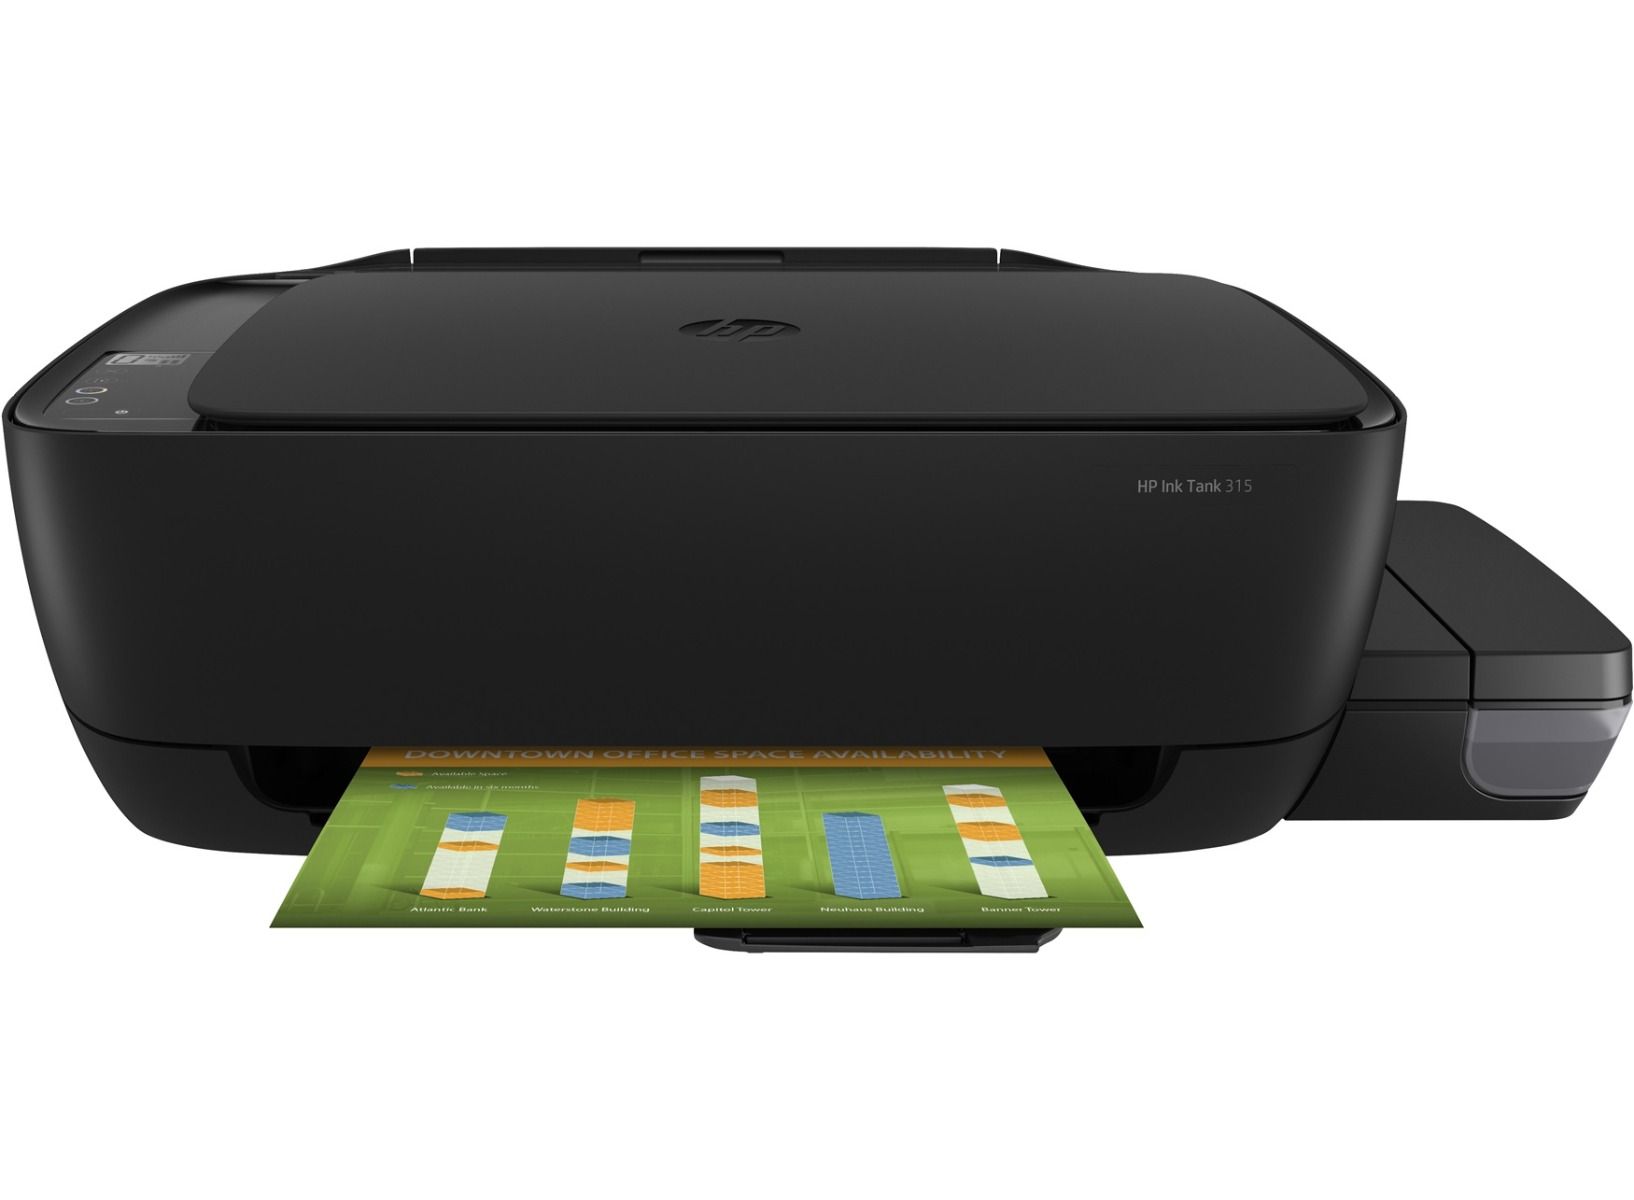 HP 315 Multi-function Printer